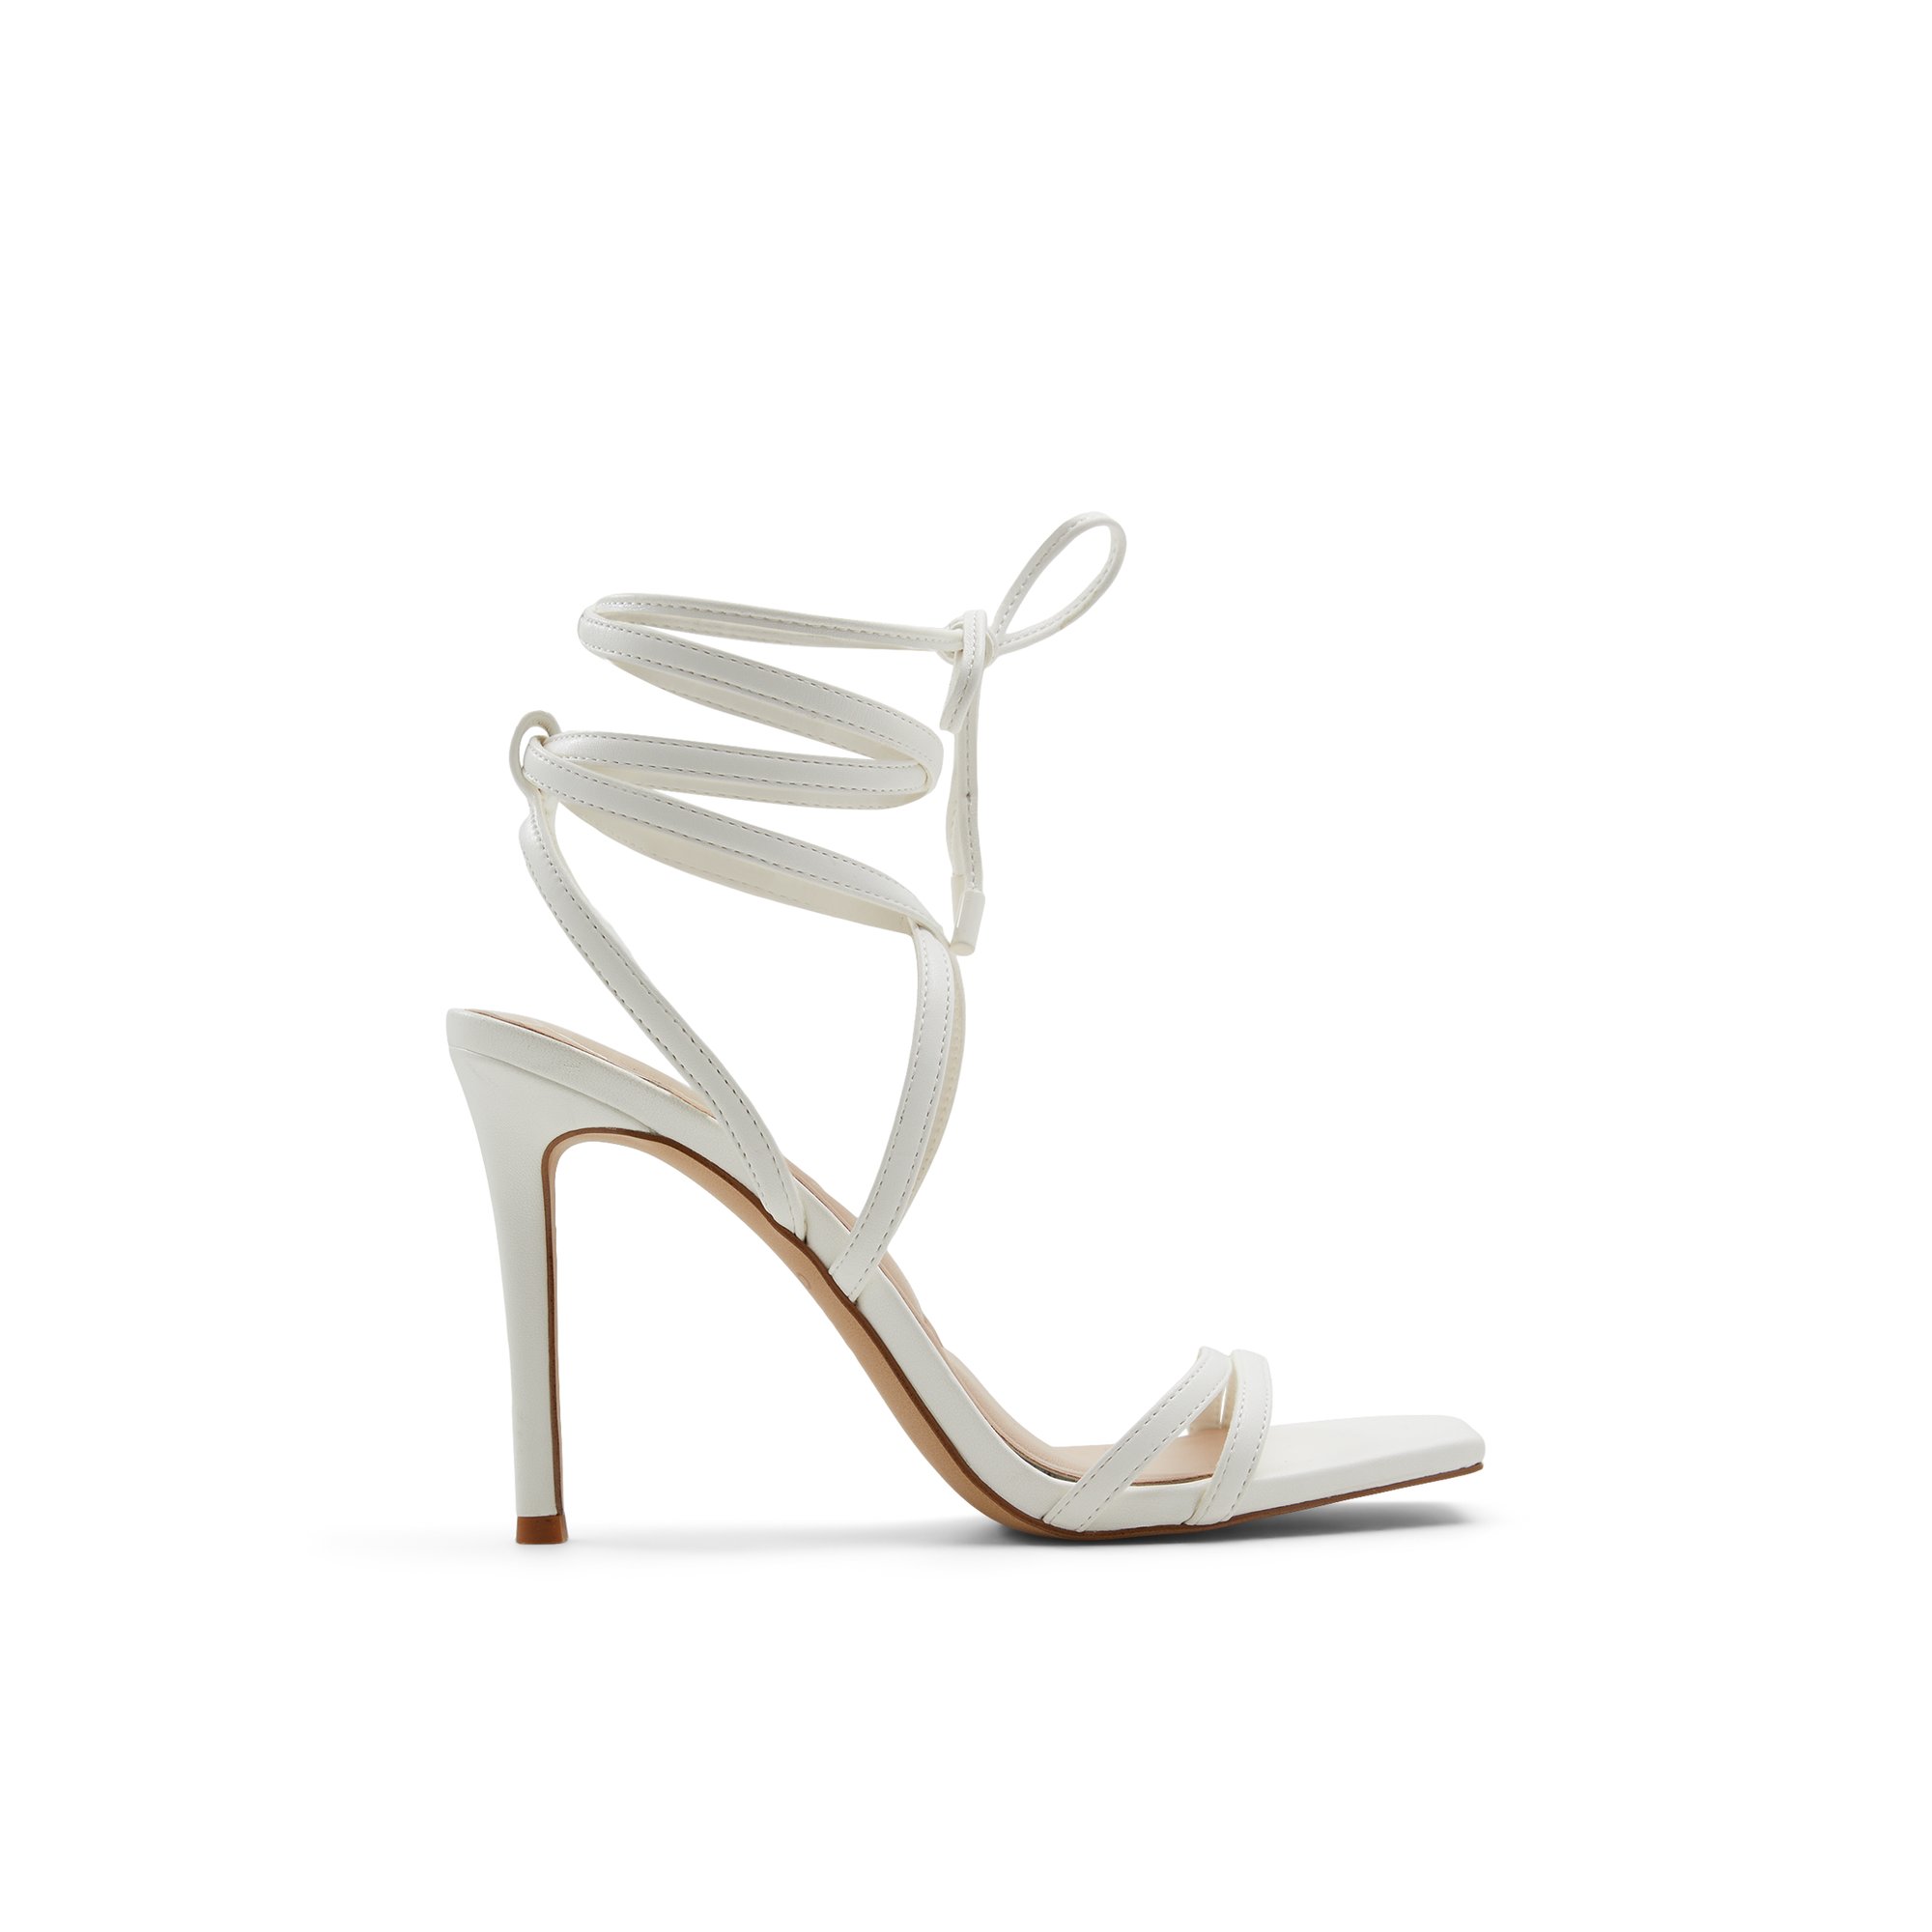 ALDO Phaedra - Women's Strappy Sandal Sandals - White